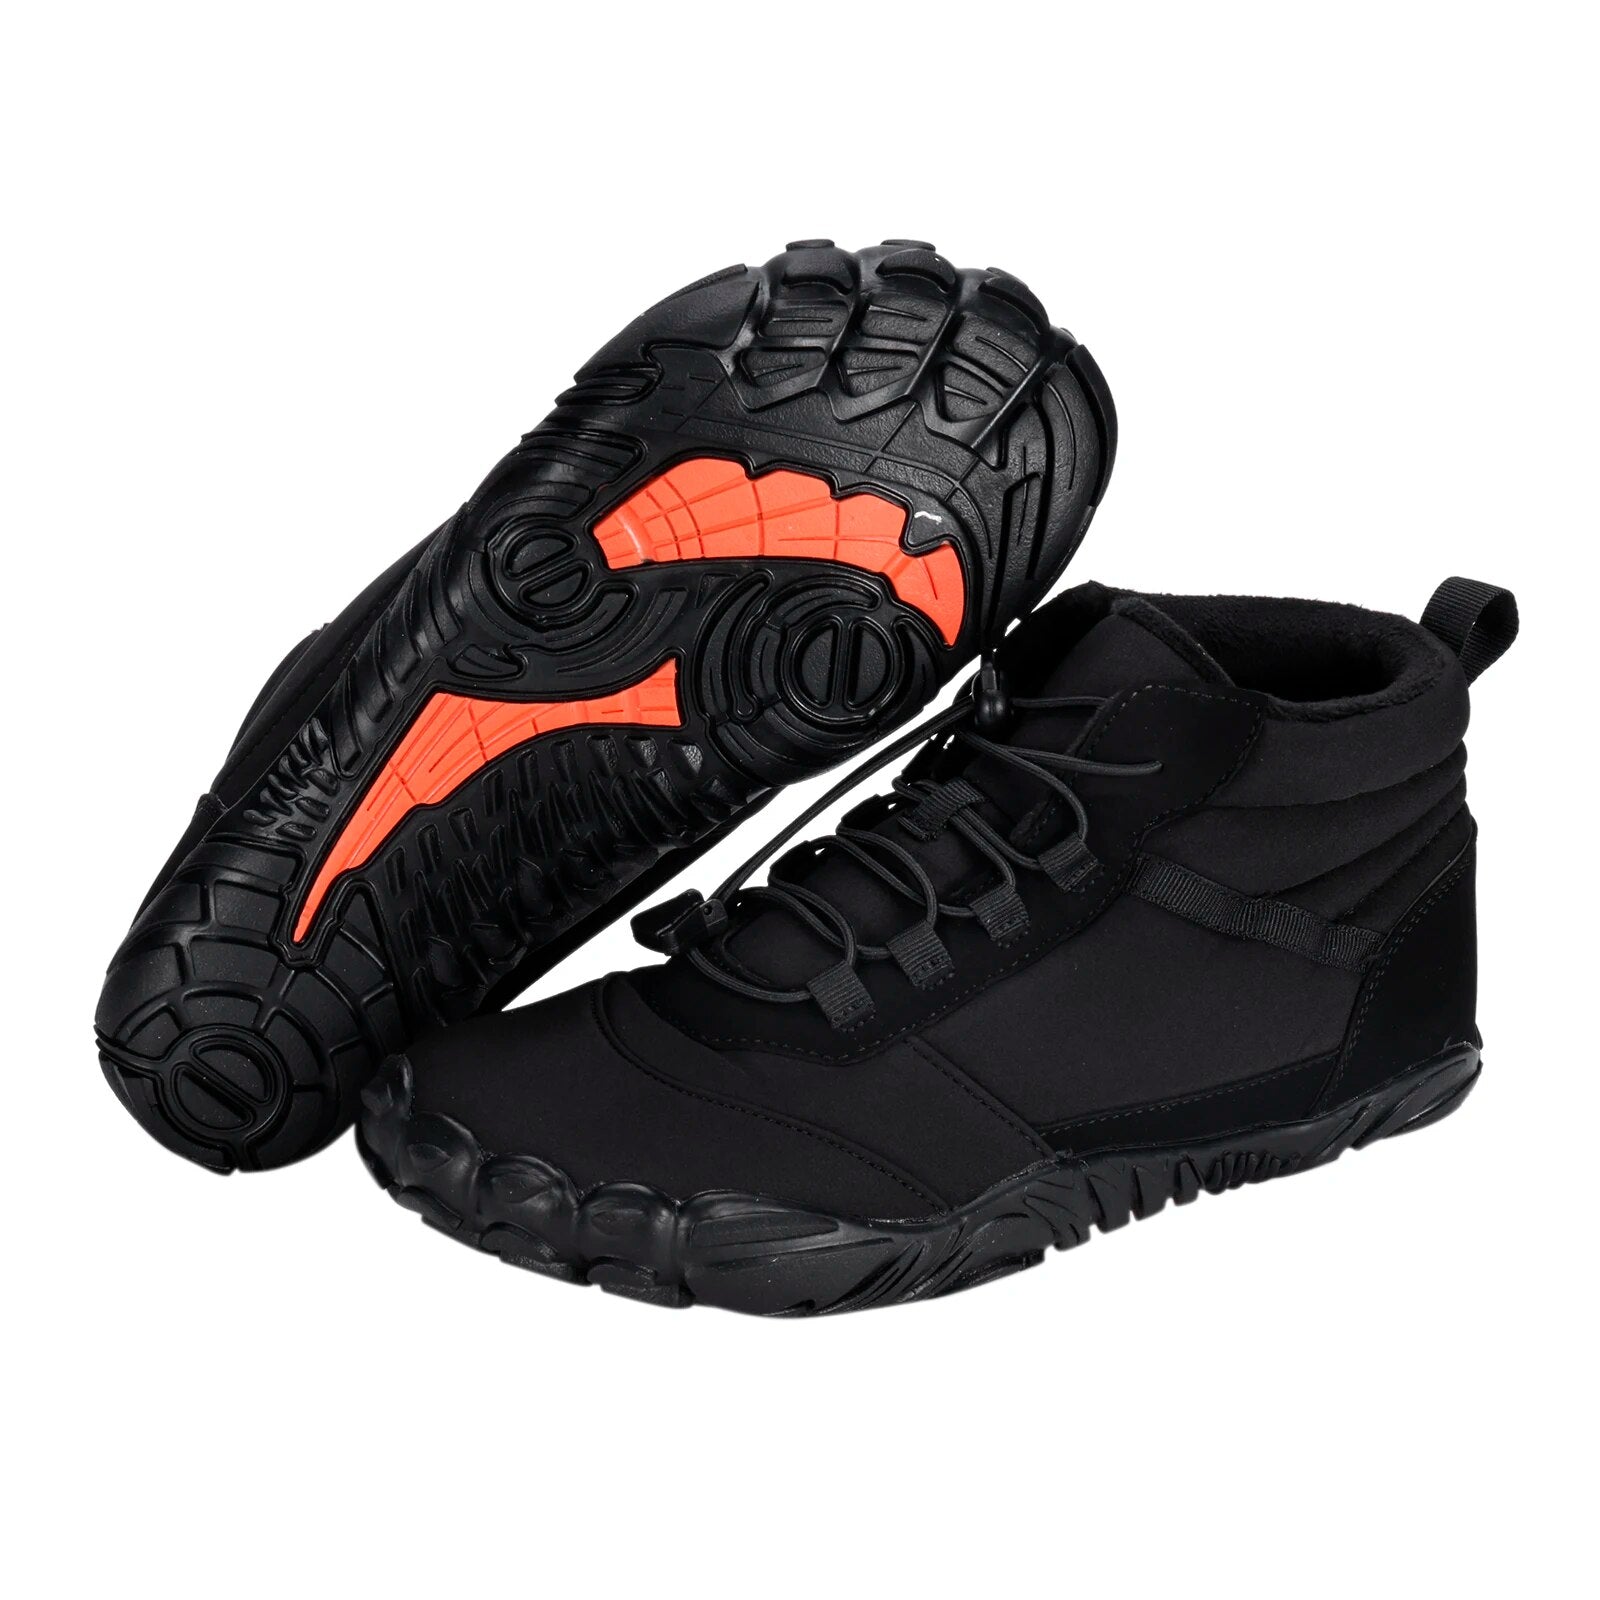 ArcticStride™ Warm Barefoot Winter Boots - Waterproof Non-Slip Design Ultra-Lightweight